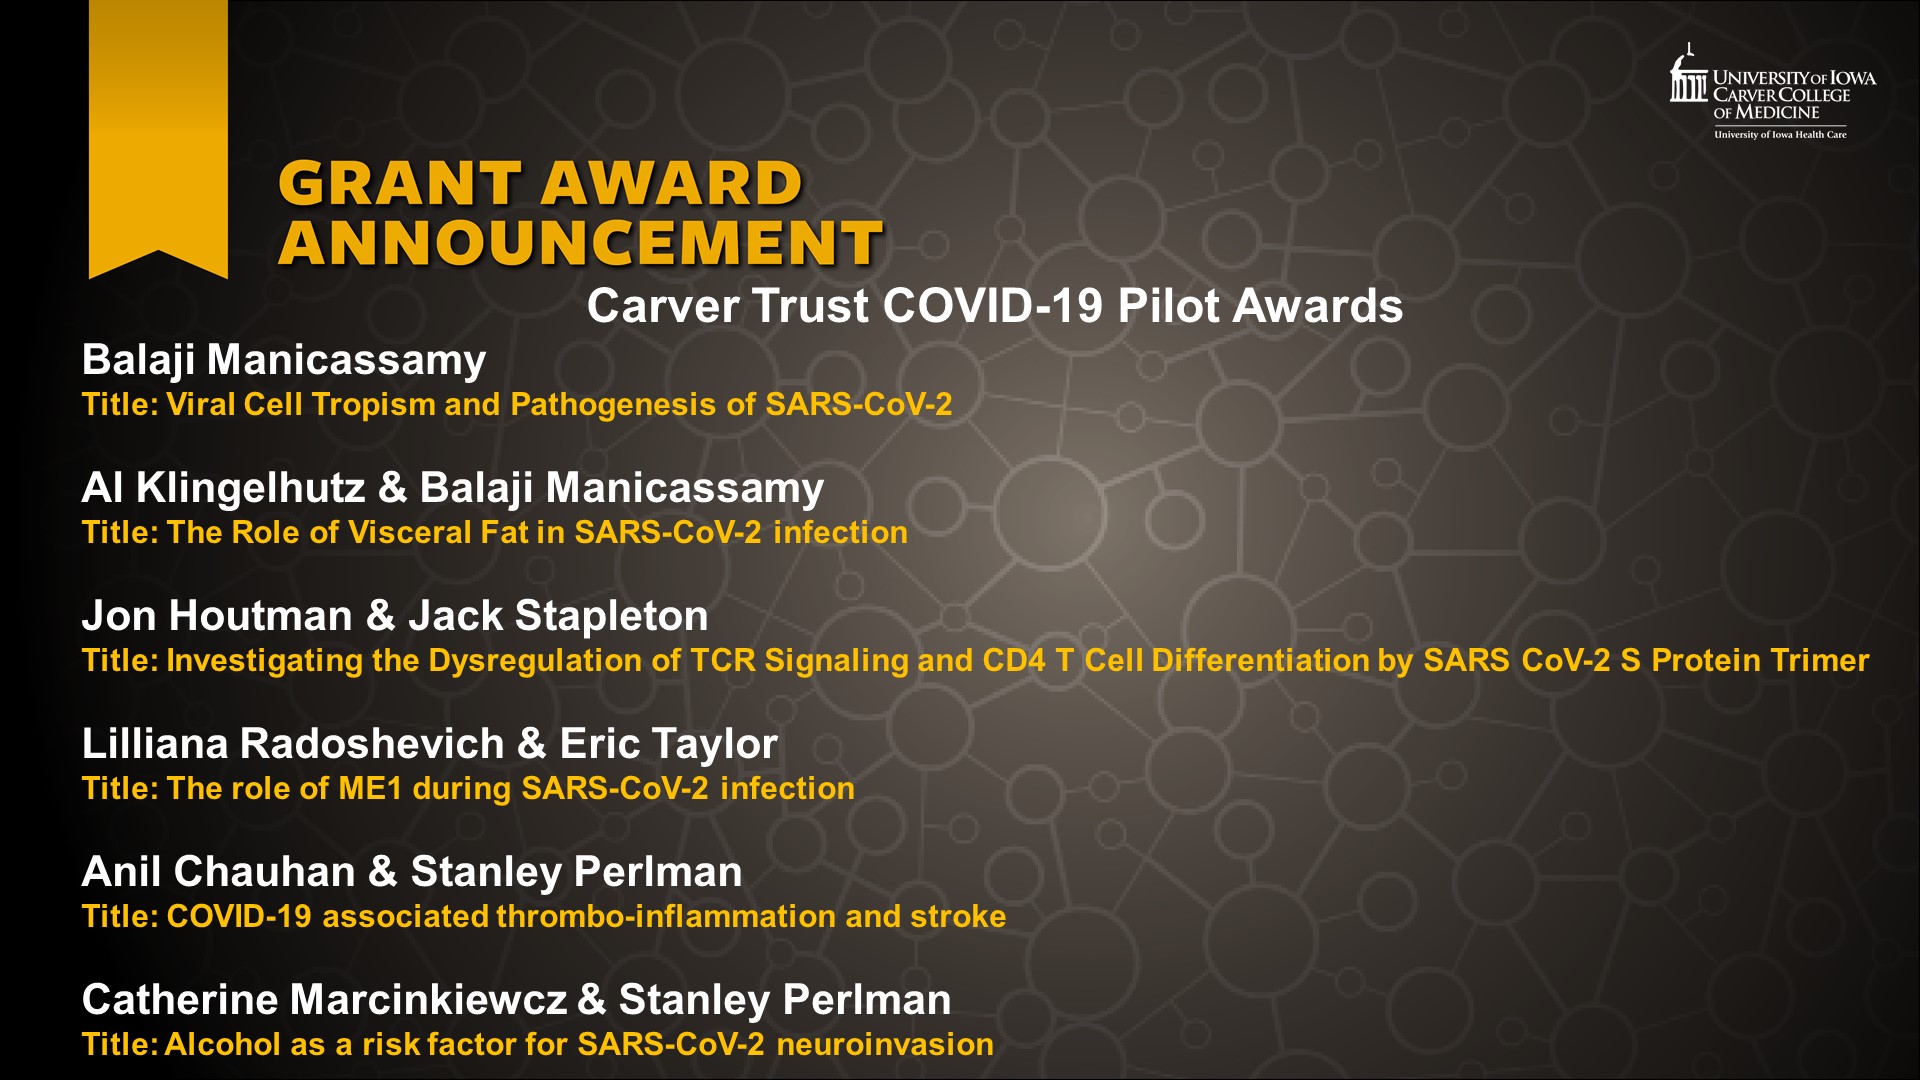 Carver Trust COVID-19 Pilot Awards Department awardees list